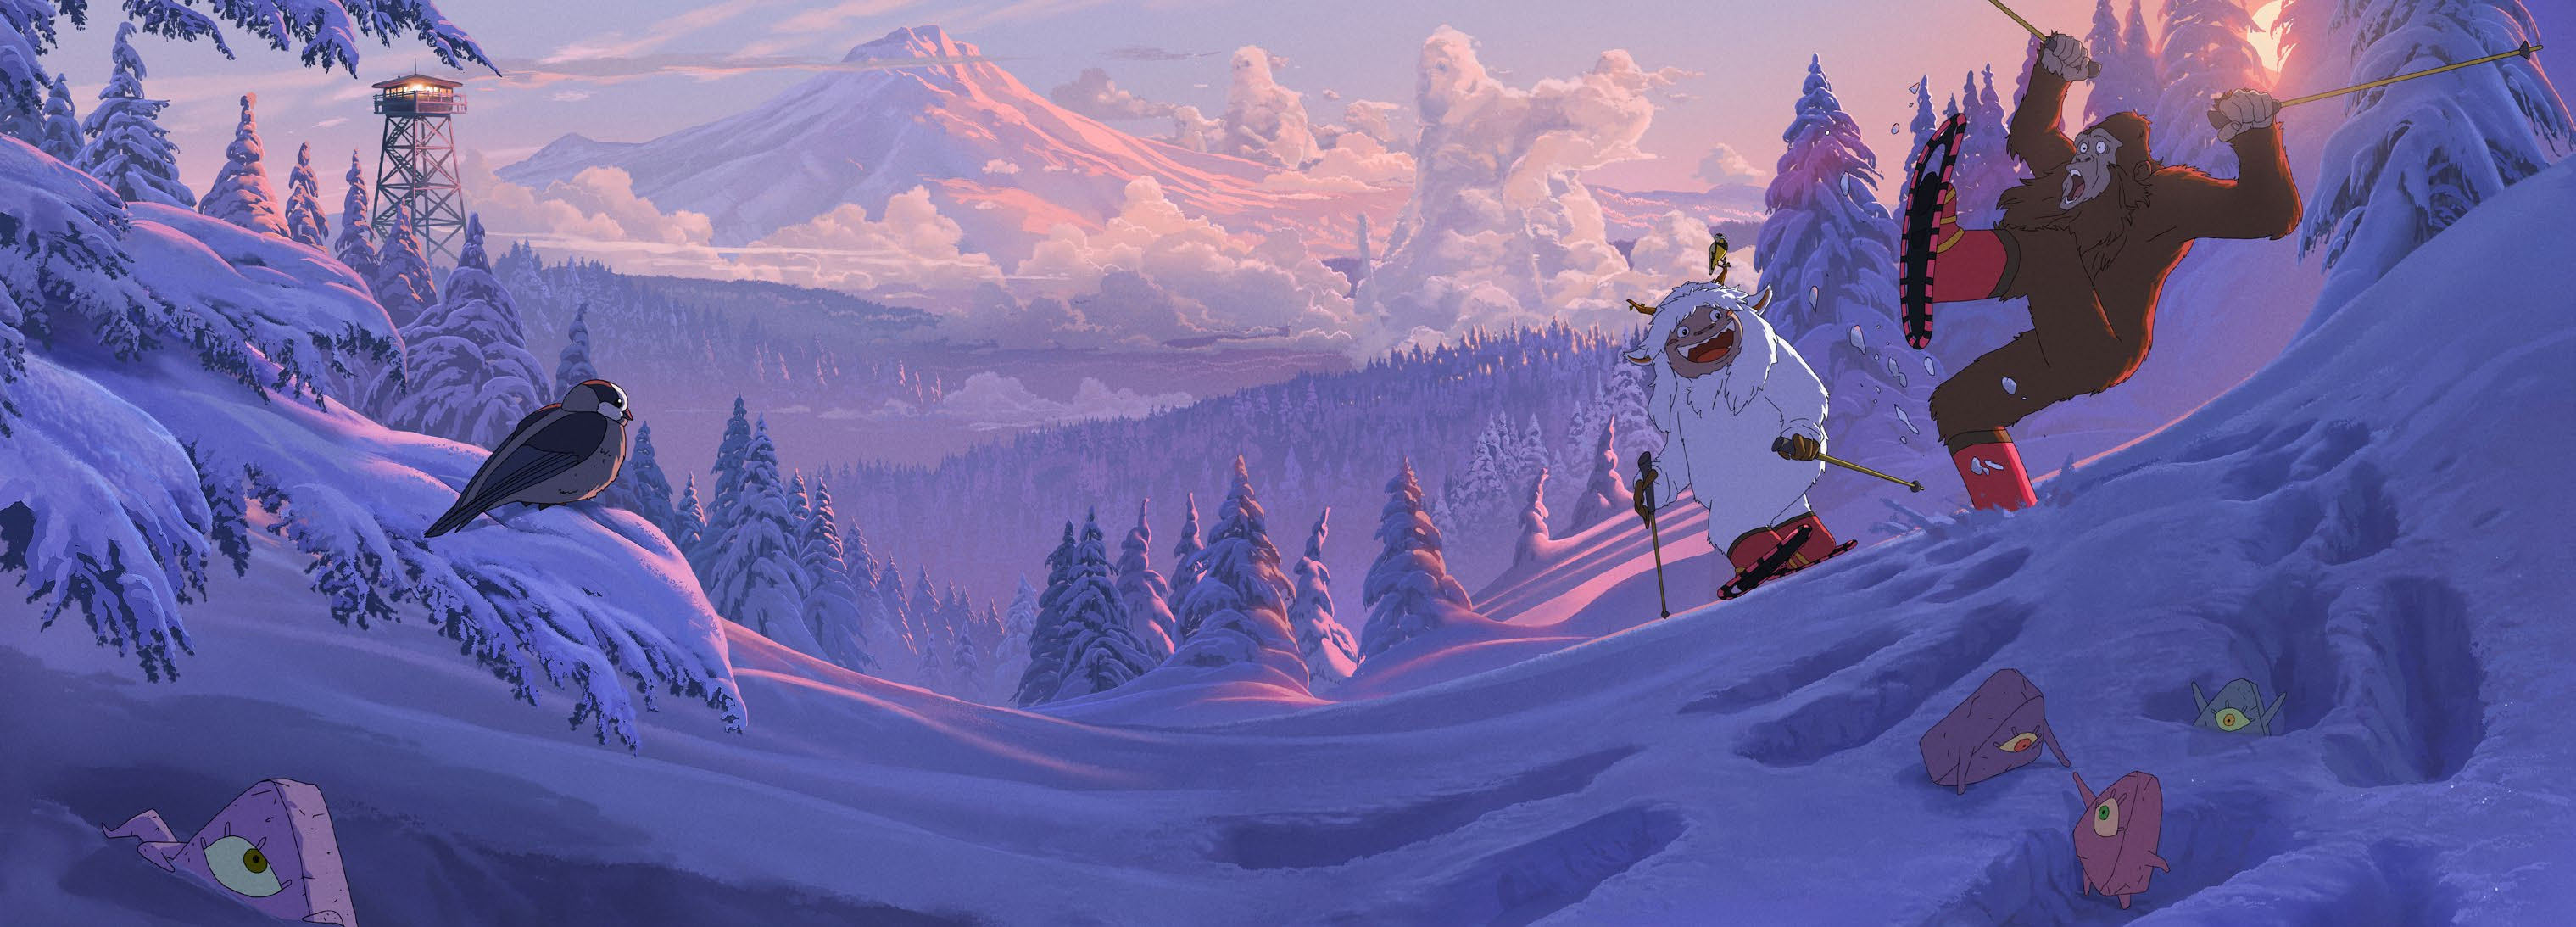 General 3038x1093 Oregon Portland Studio Ghibli Hayao Miyazaki Yeti sasquatch squatch digital painting landscape vacation snowshoes anime